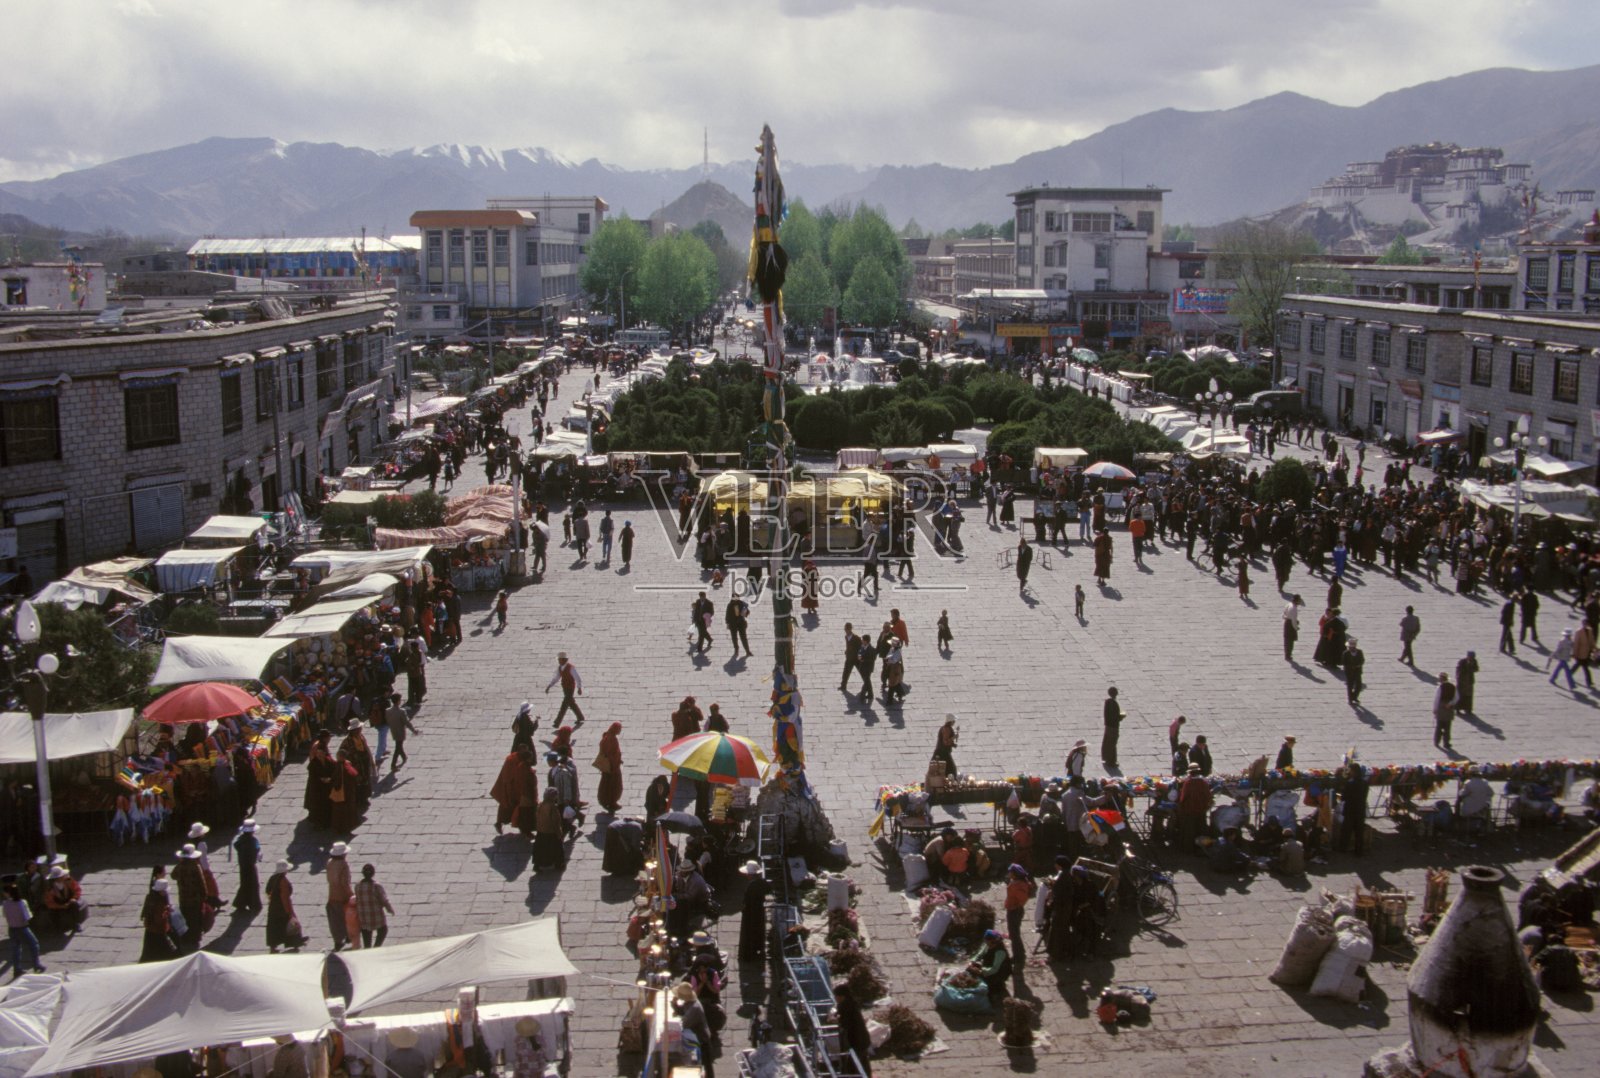 Jokhang Temple Square with Potala Palace in Lhasa, Tibet (大昭寺.布达拉宫)照片摄影图片